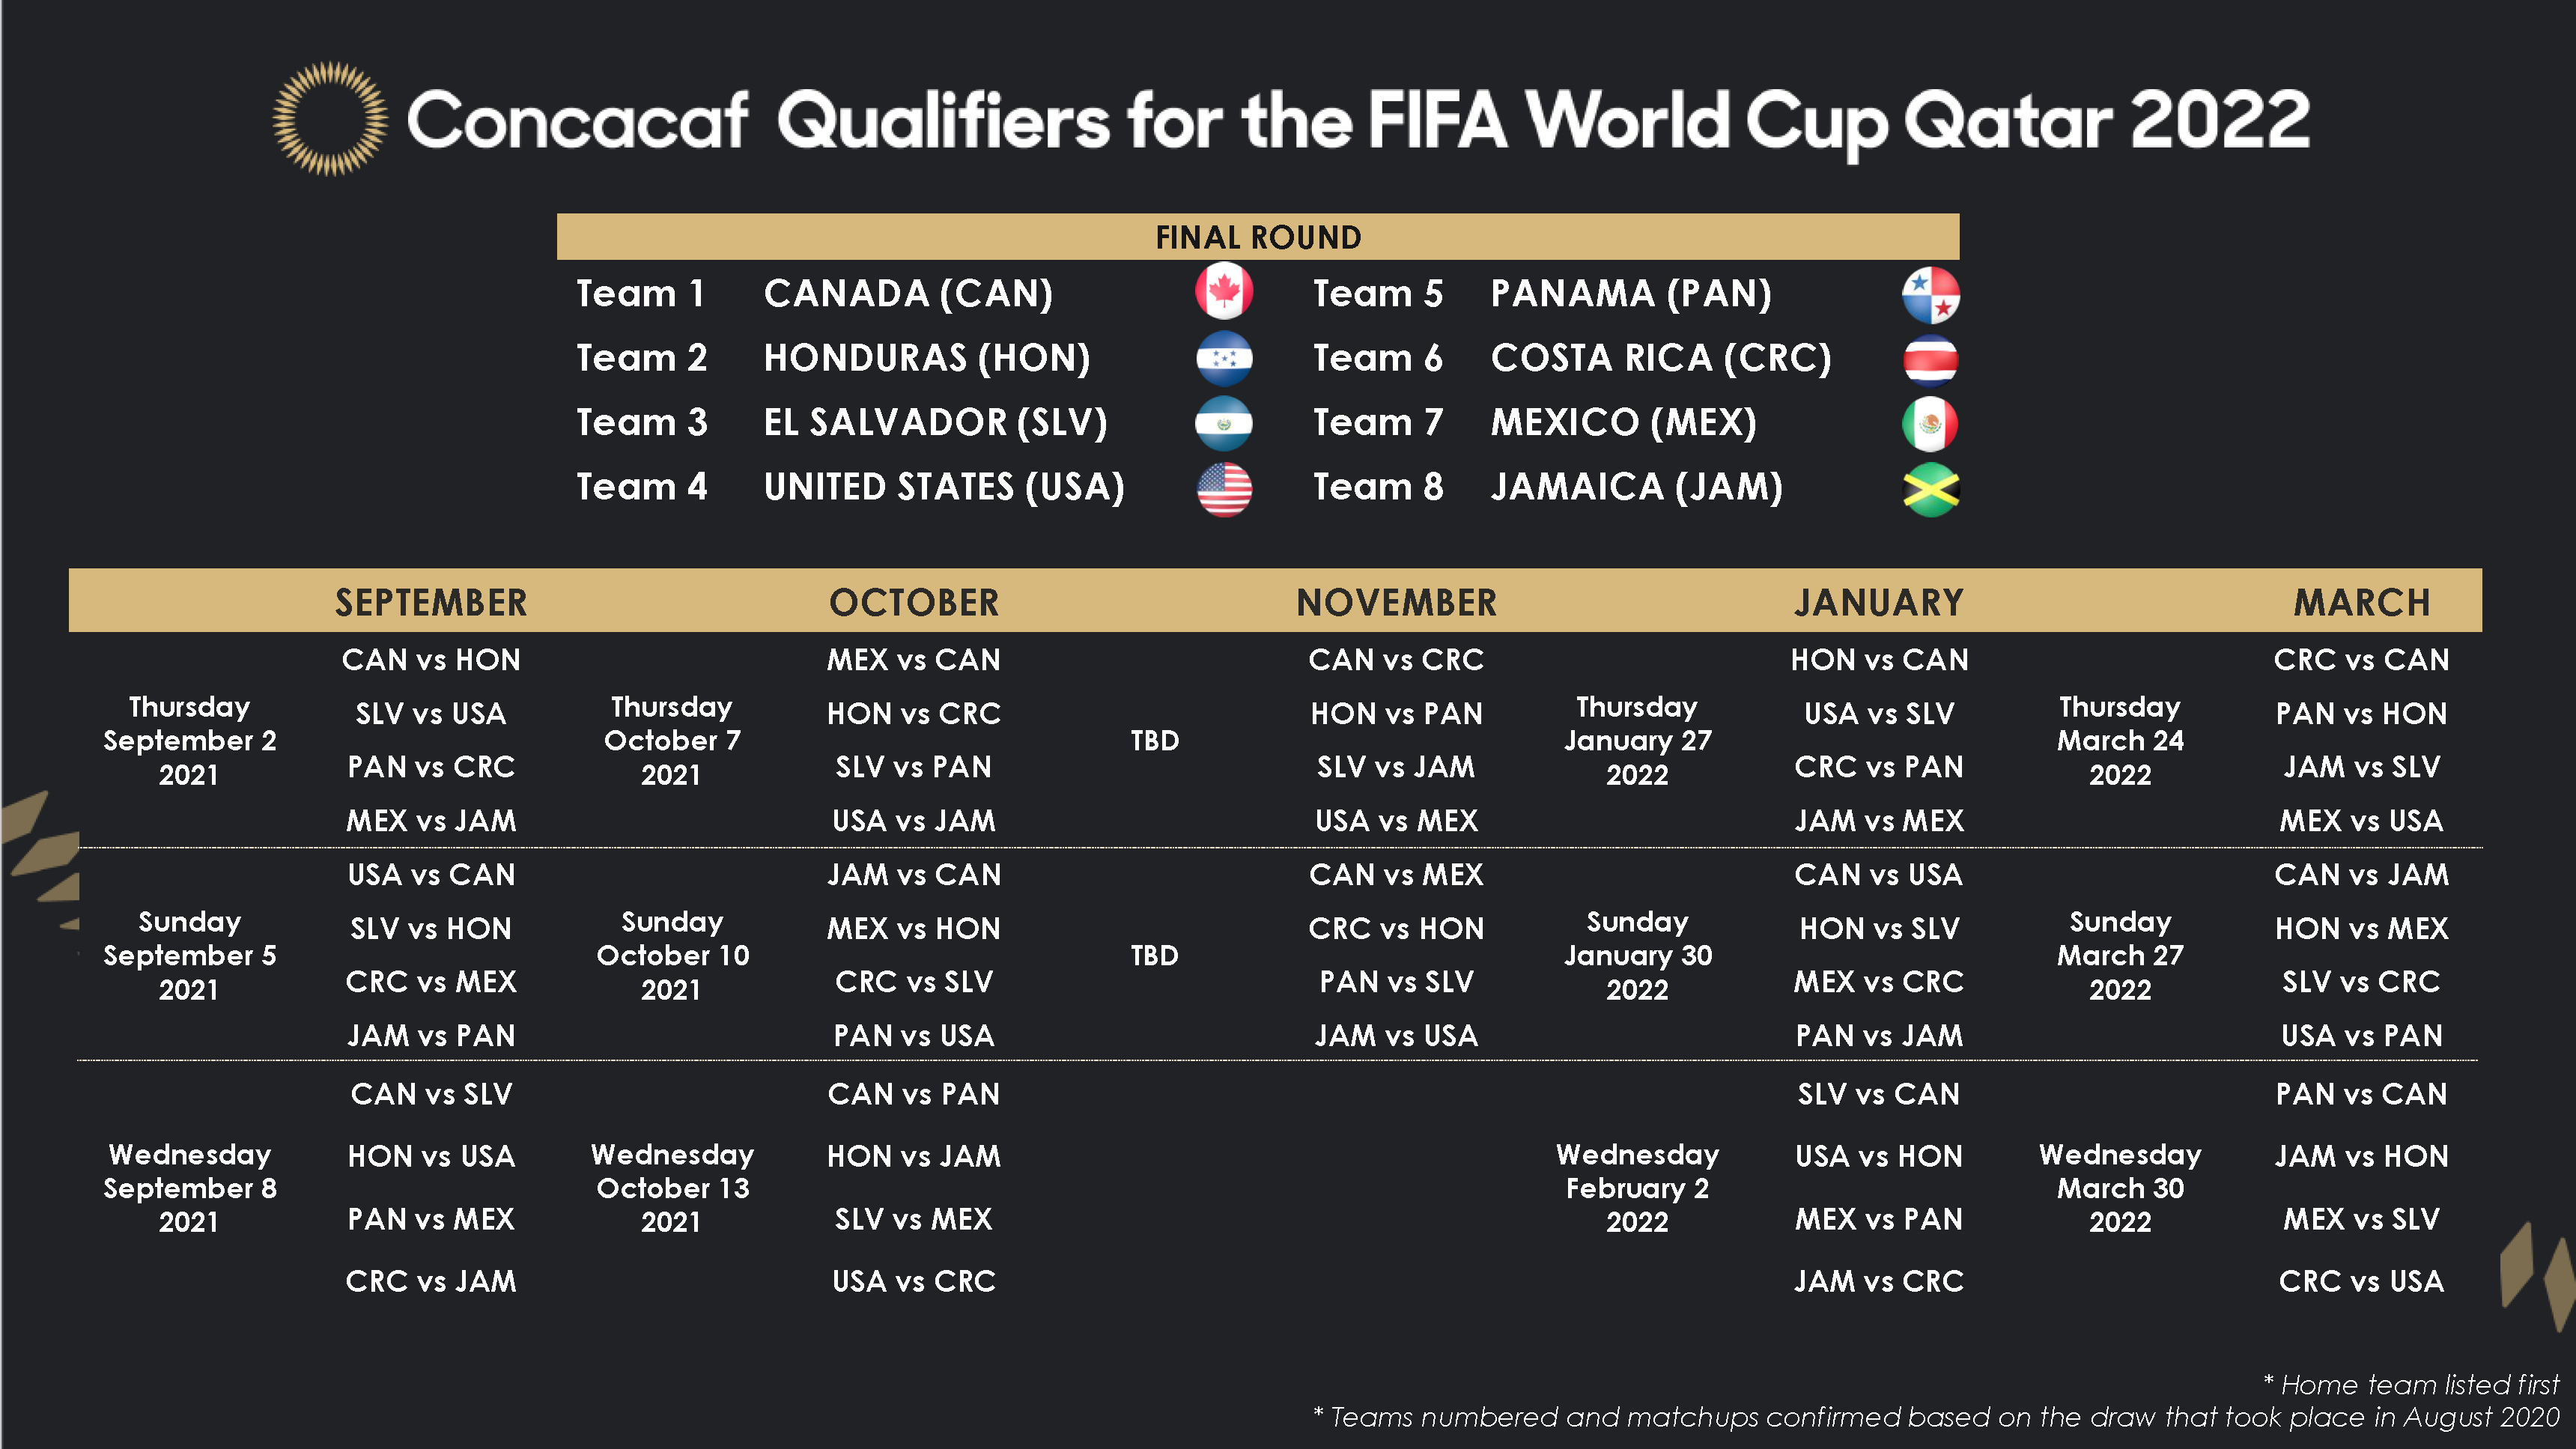 Mundial 2022 Schedule Concacaf On Twitter: "Here Is The Final Round Calendar For The Concacaf  Qualifiers For The Fifa World Cup Qatar 2022👇 🗓️ Reserva Las Fechas, El  Calendario De Las Clasificatorias De Concacaf Para